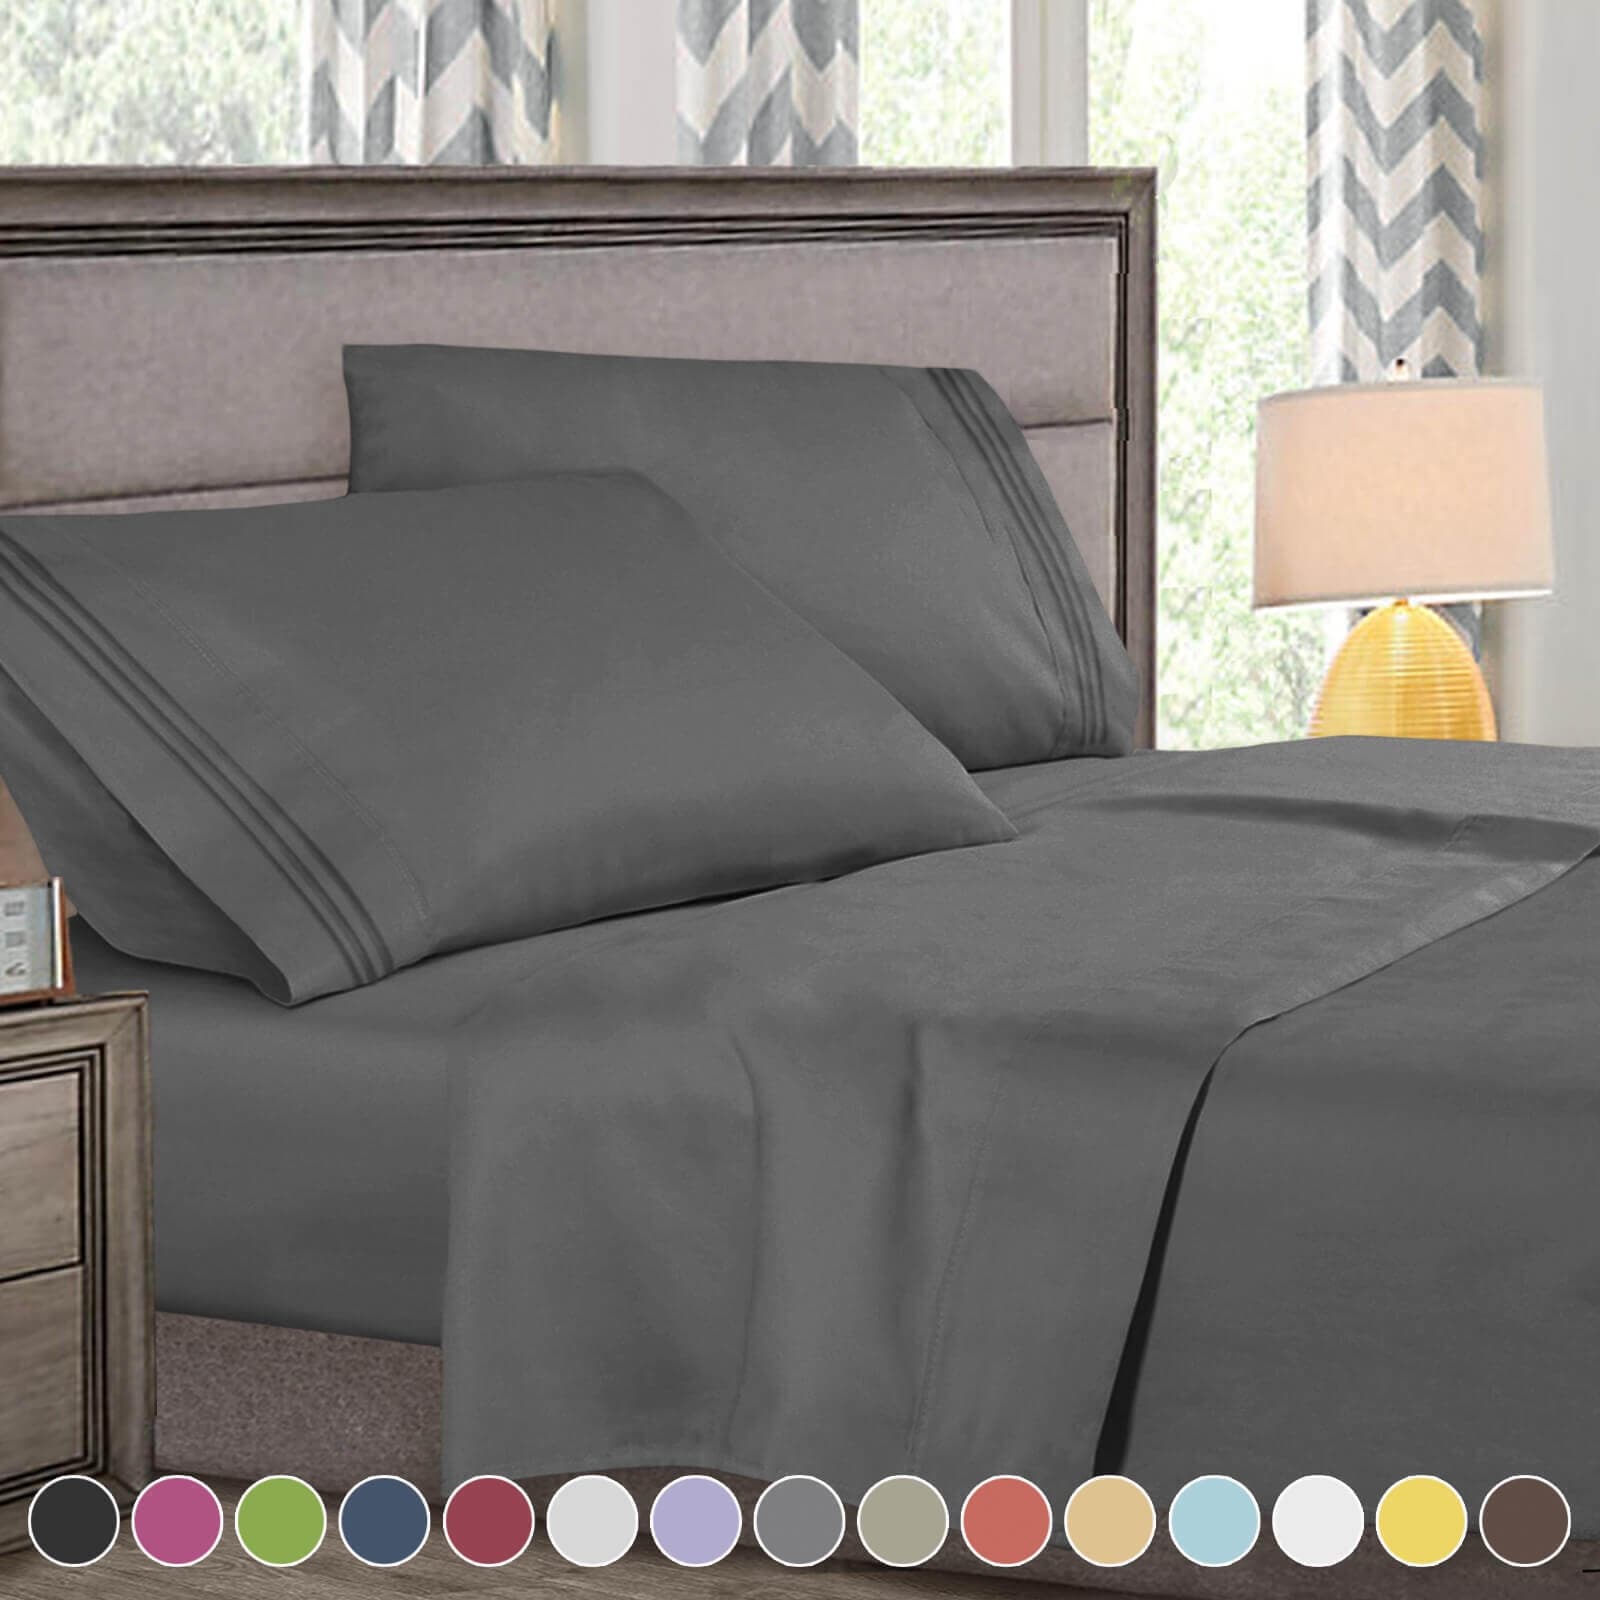 4 Pcs Deluxe Deep Pocket Bed Sheet Set in King Size - Bed Bath & Beyond -  39459138